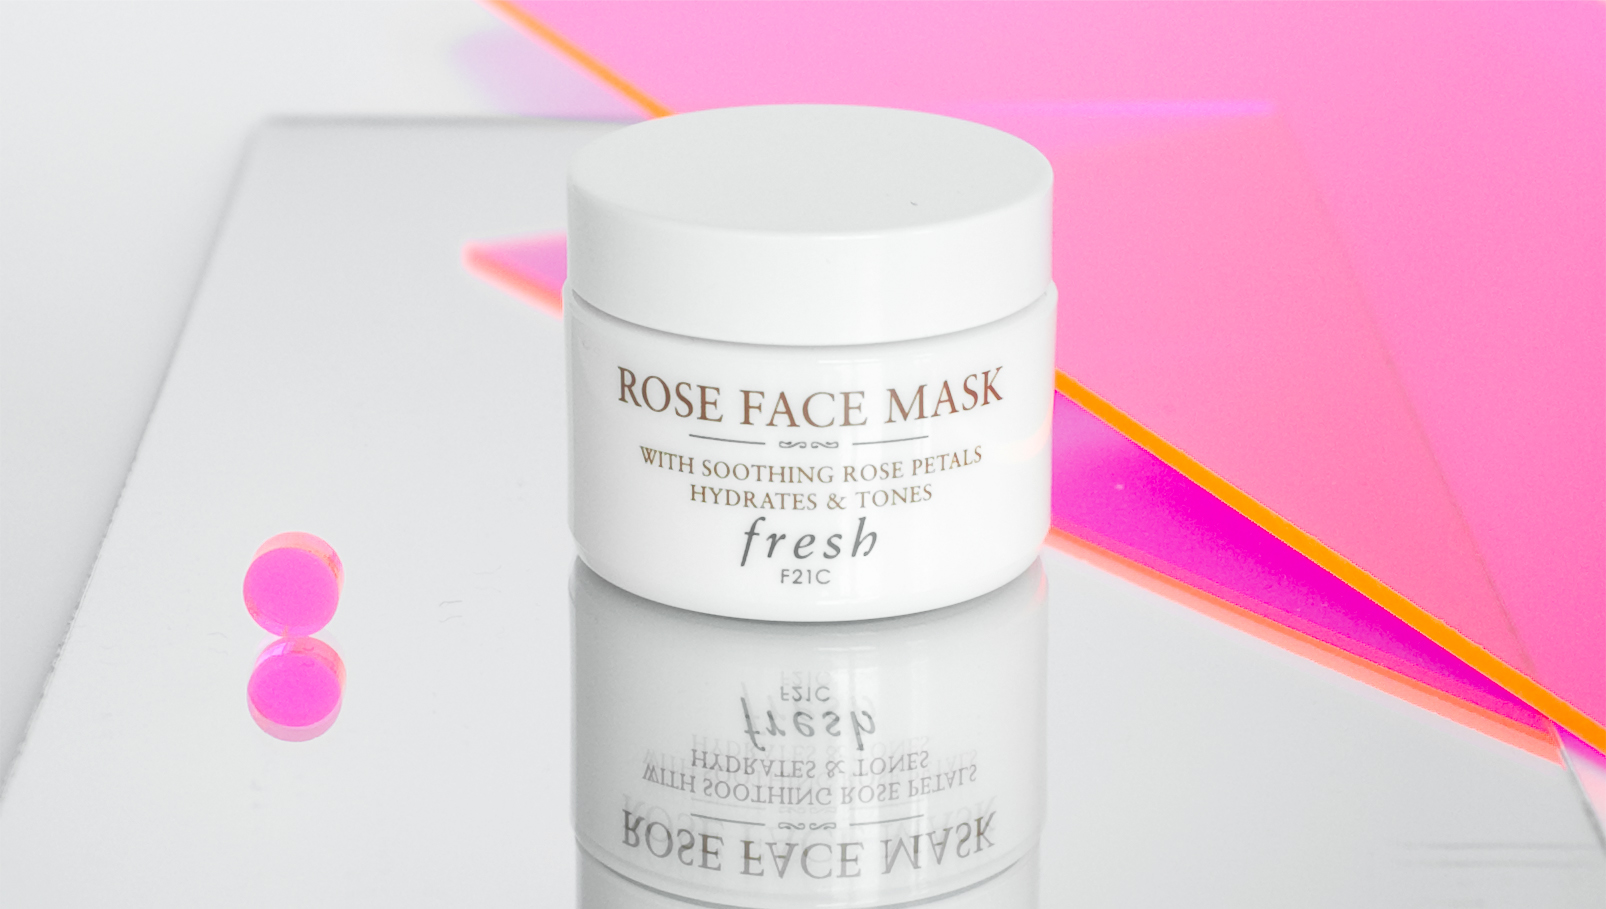 Rose Face Mask, $62